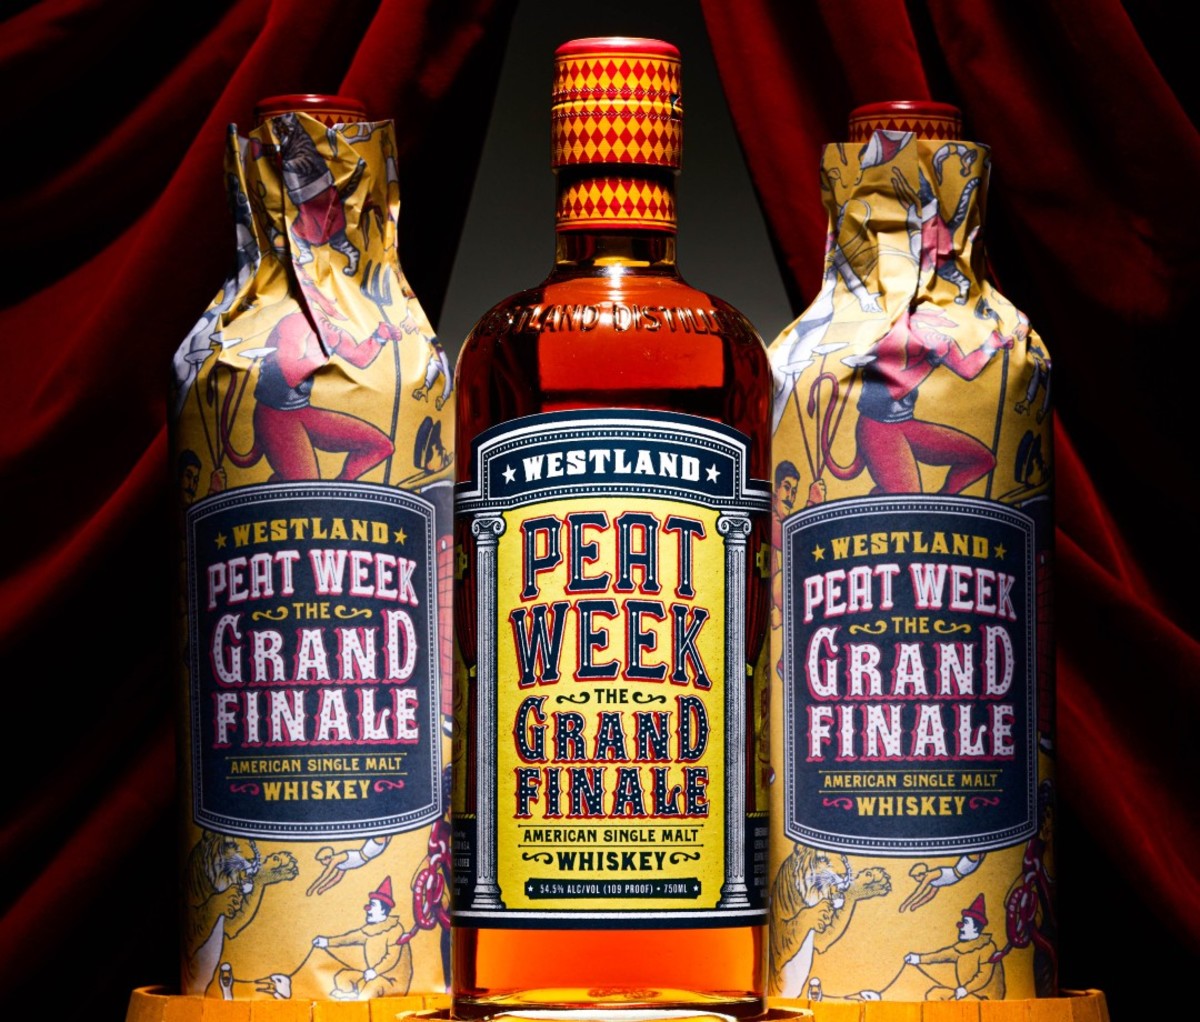 Bottles of whiskey that read Peat Week Grand Finale